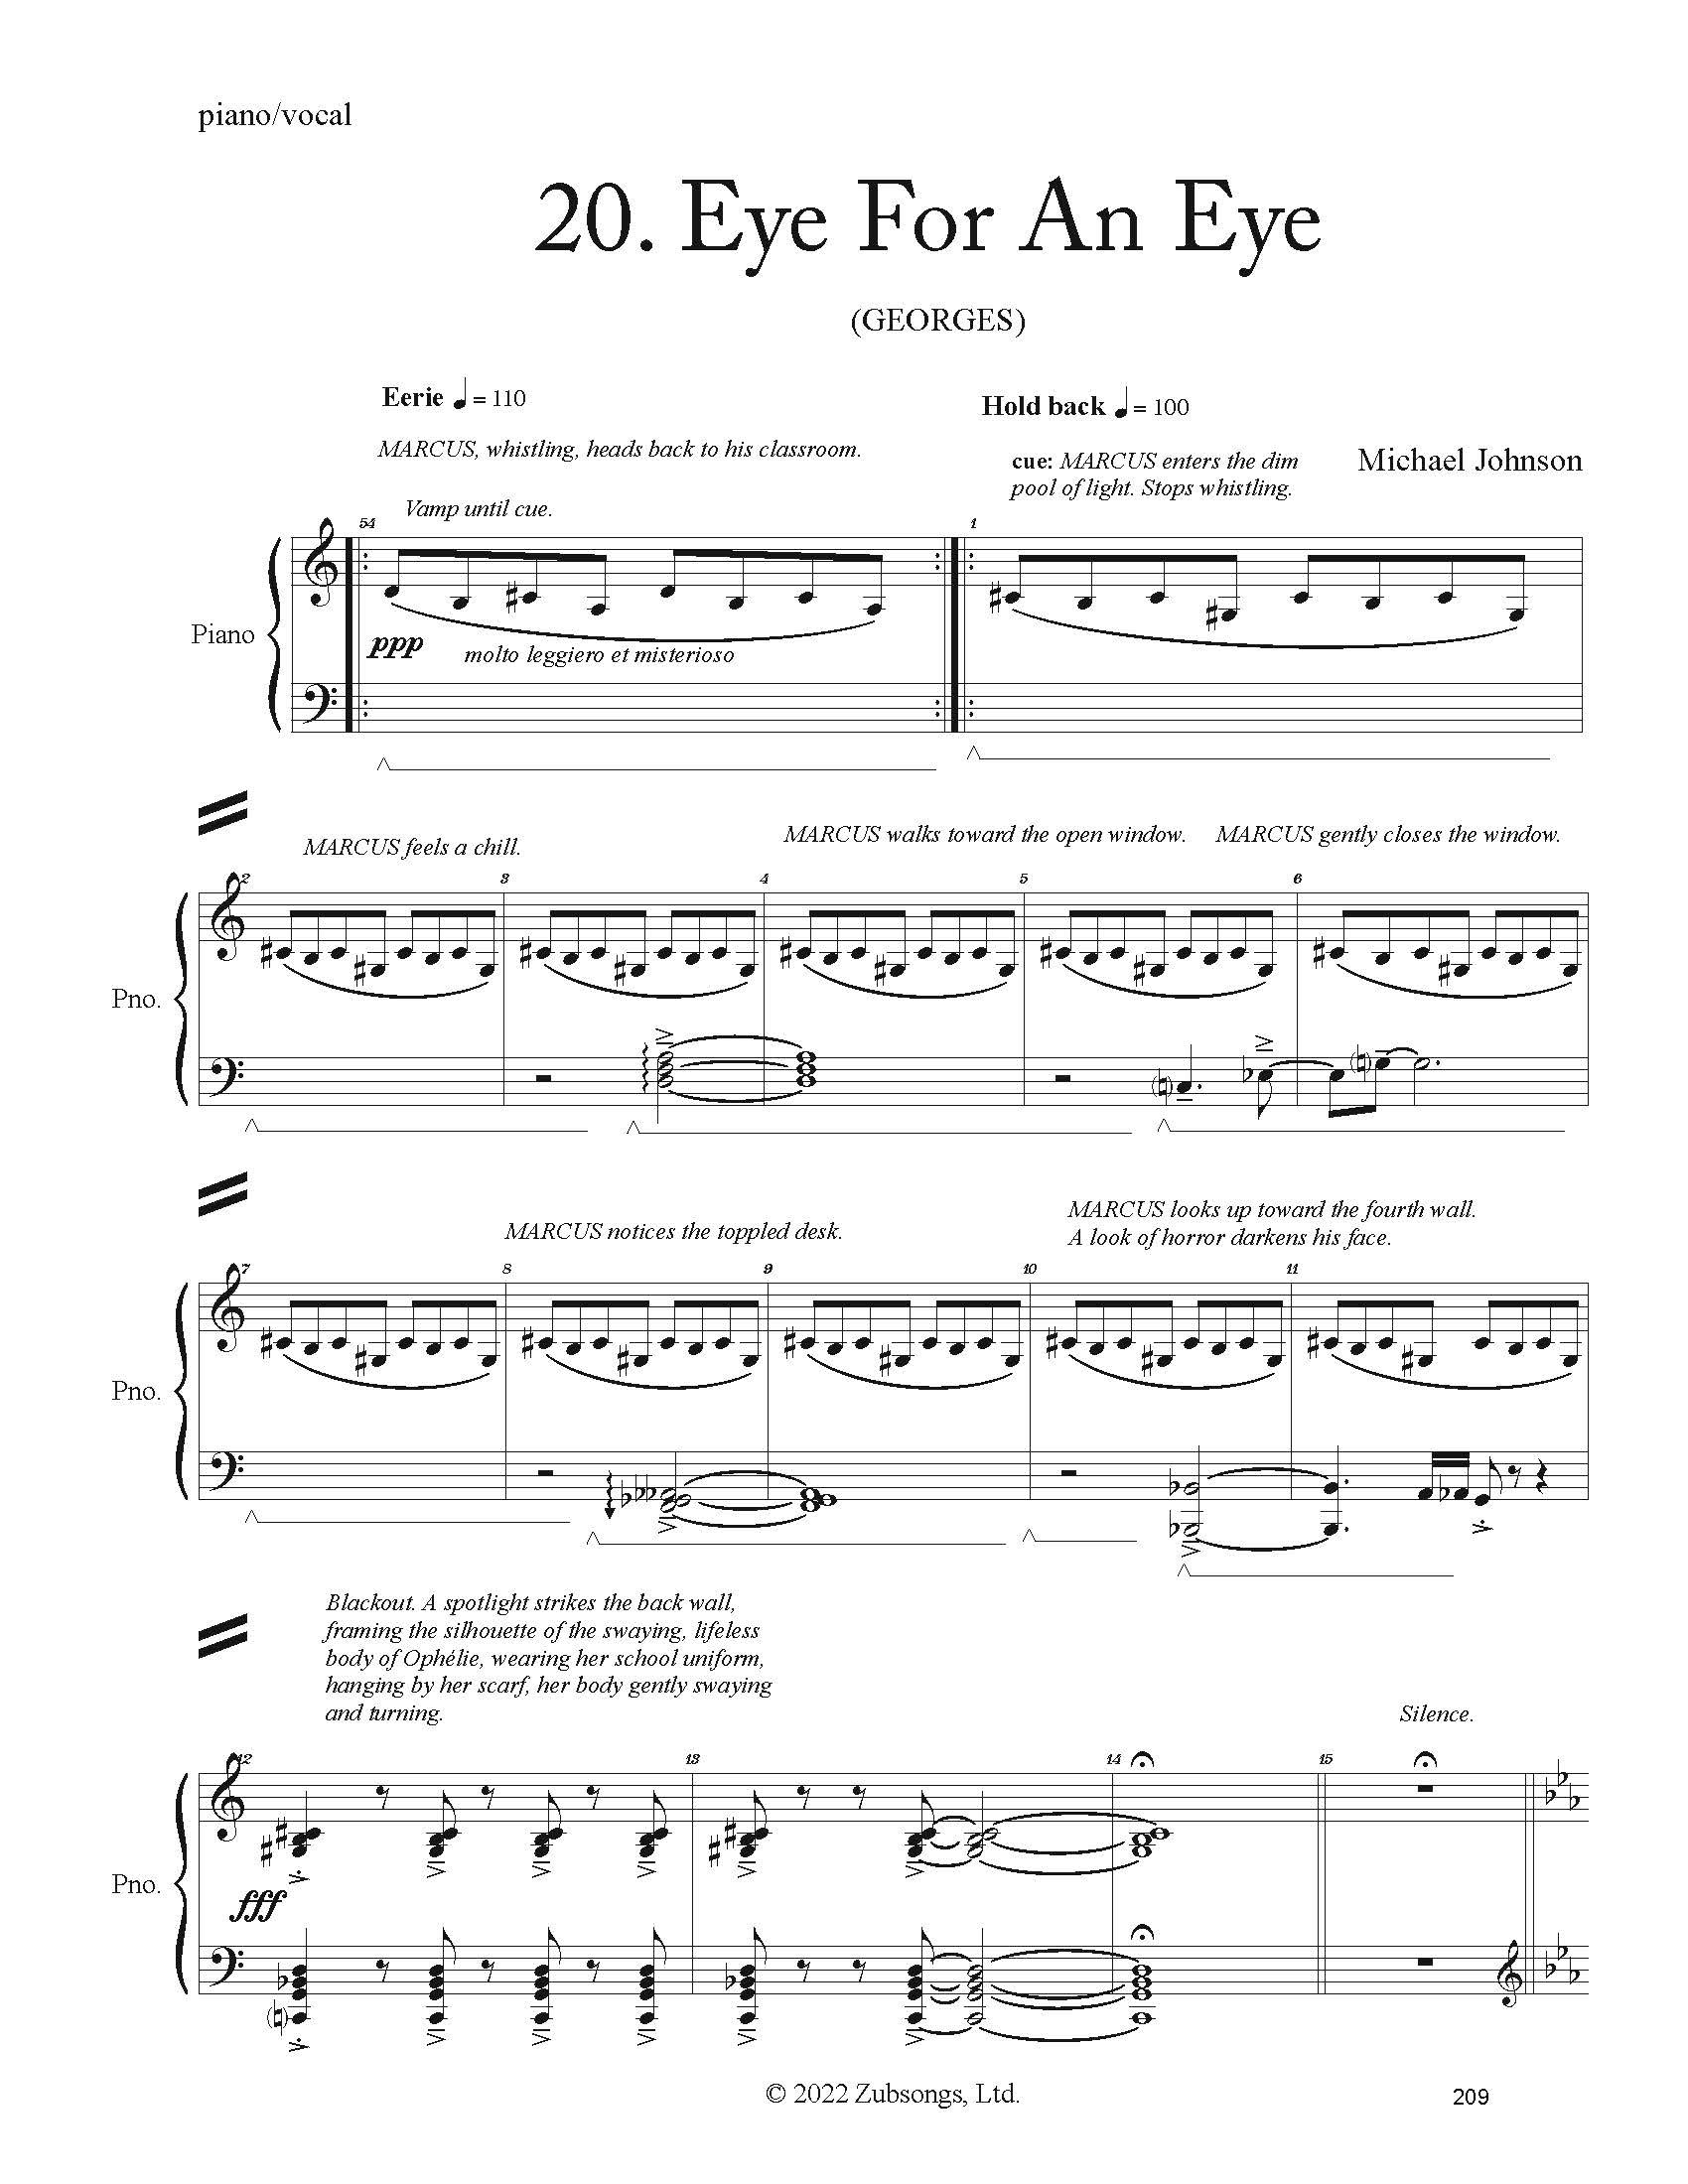 FULL PIANO VOCAL SCORE DRAFT 1 - Score_Page_209.jpg